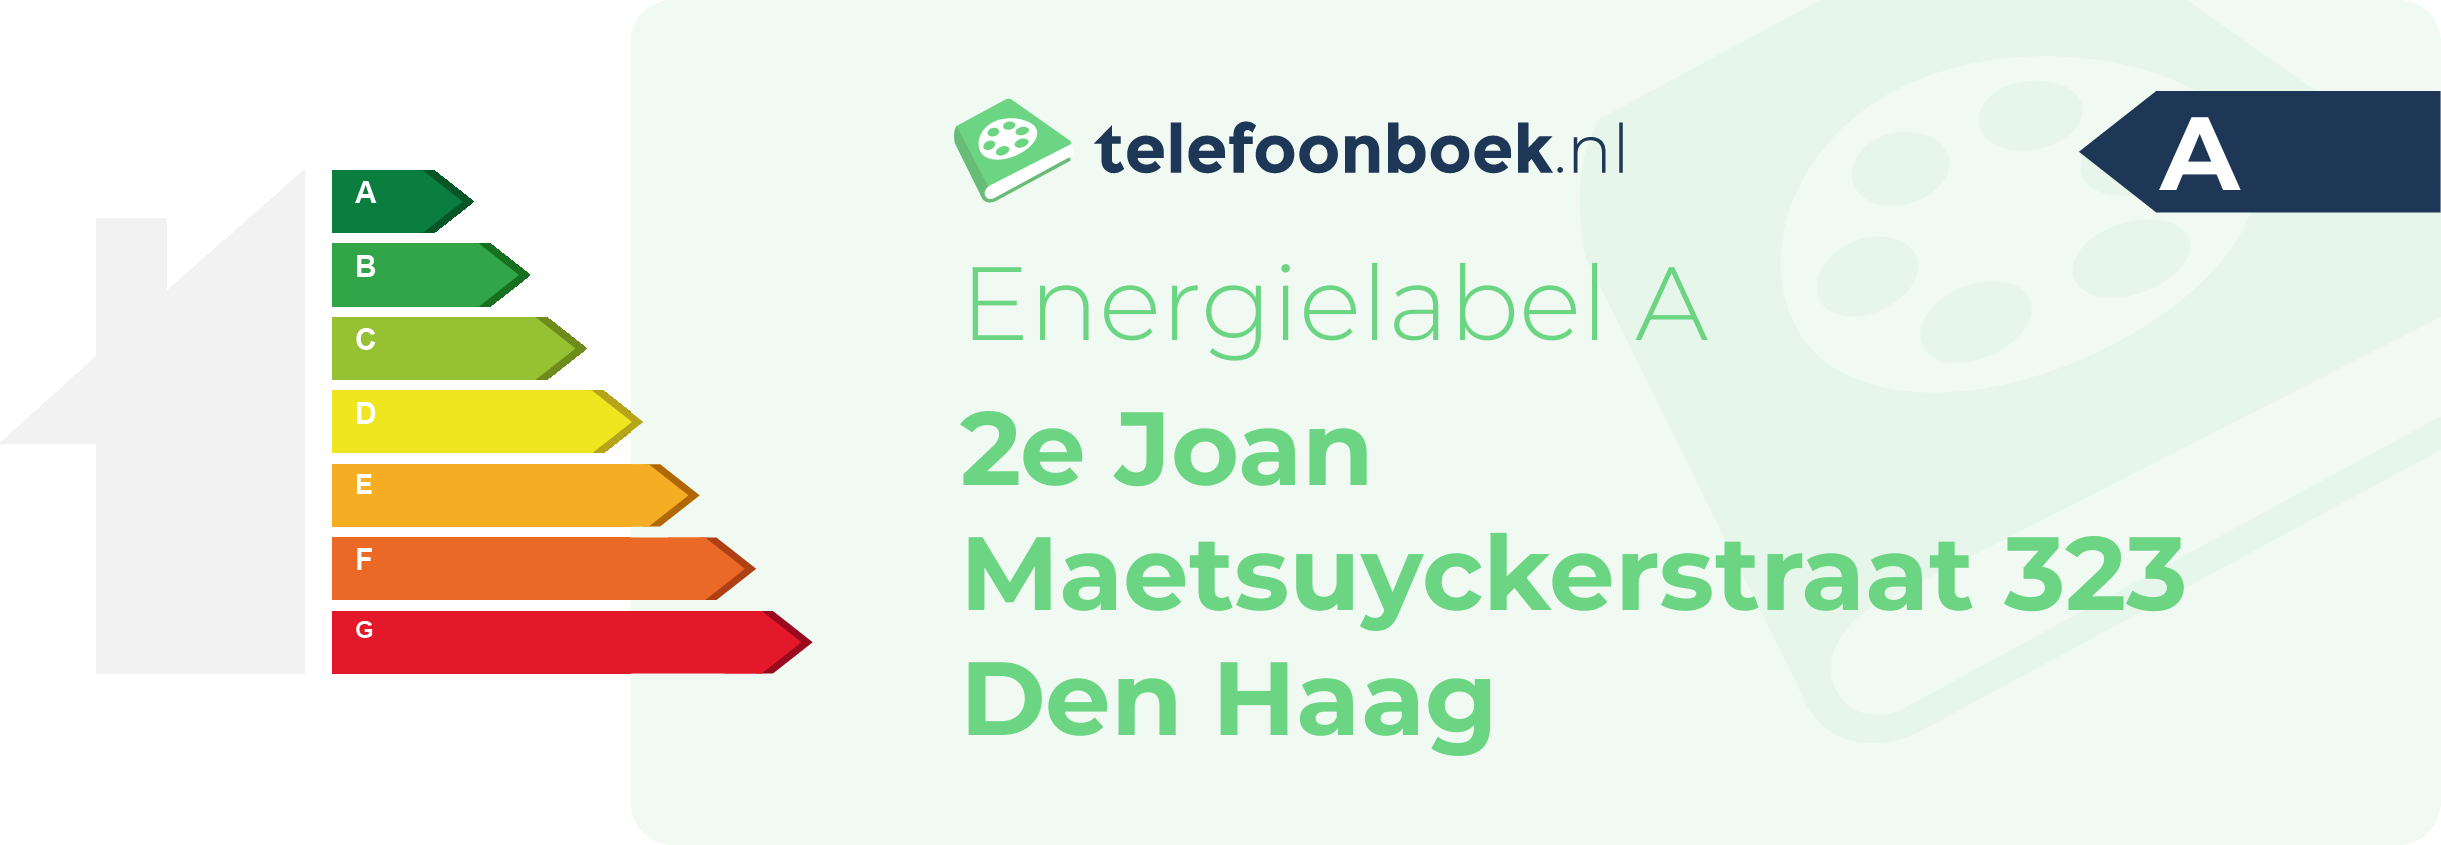 Energielabel 2e Joan Maetsuyckerstraat 323 Den Haag